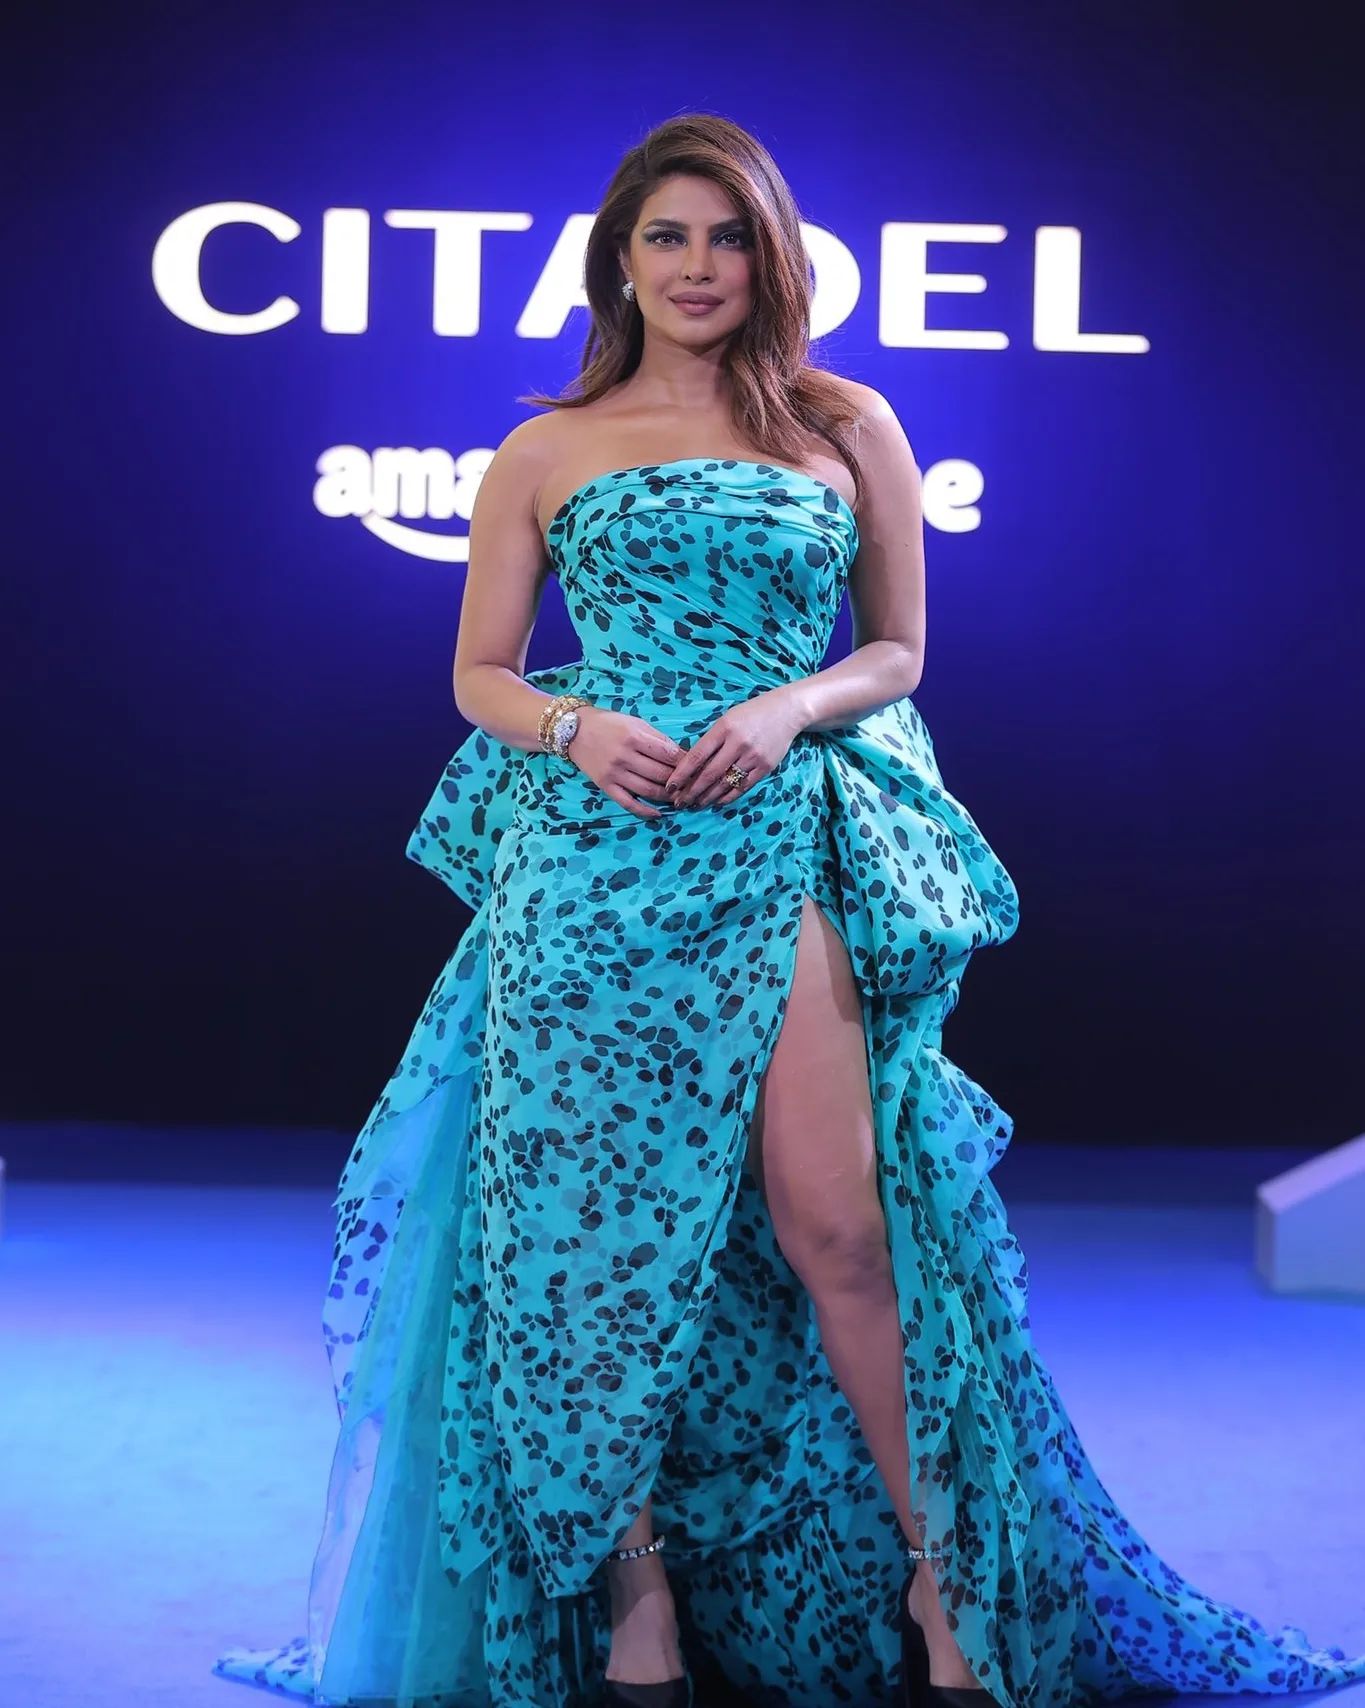 Priyanka Chopra during the premiere of Citadel in Mumbai